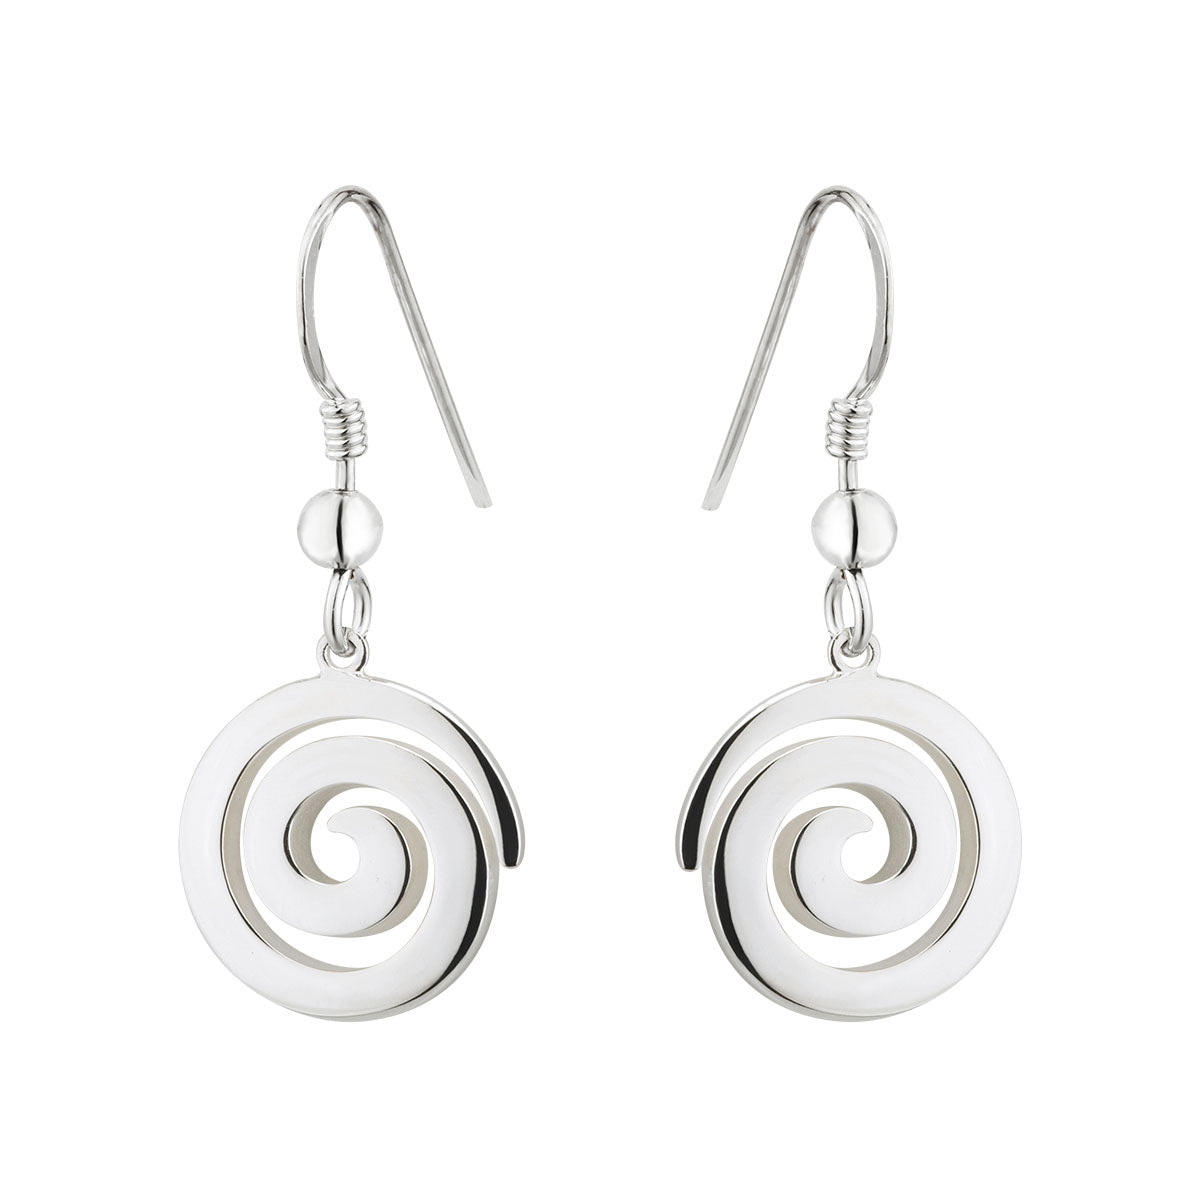 sterling silver celtic spiral drop earrings s33916 from Solvar